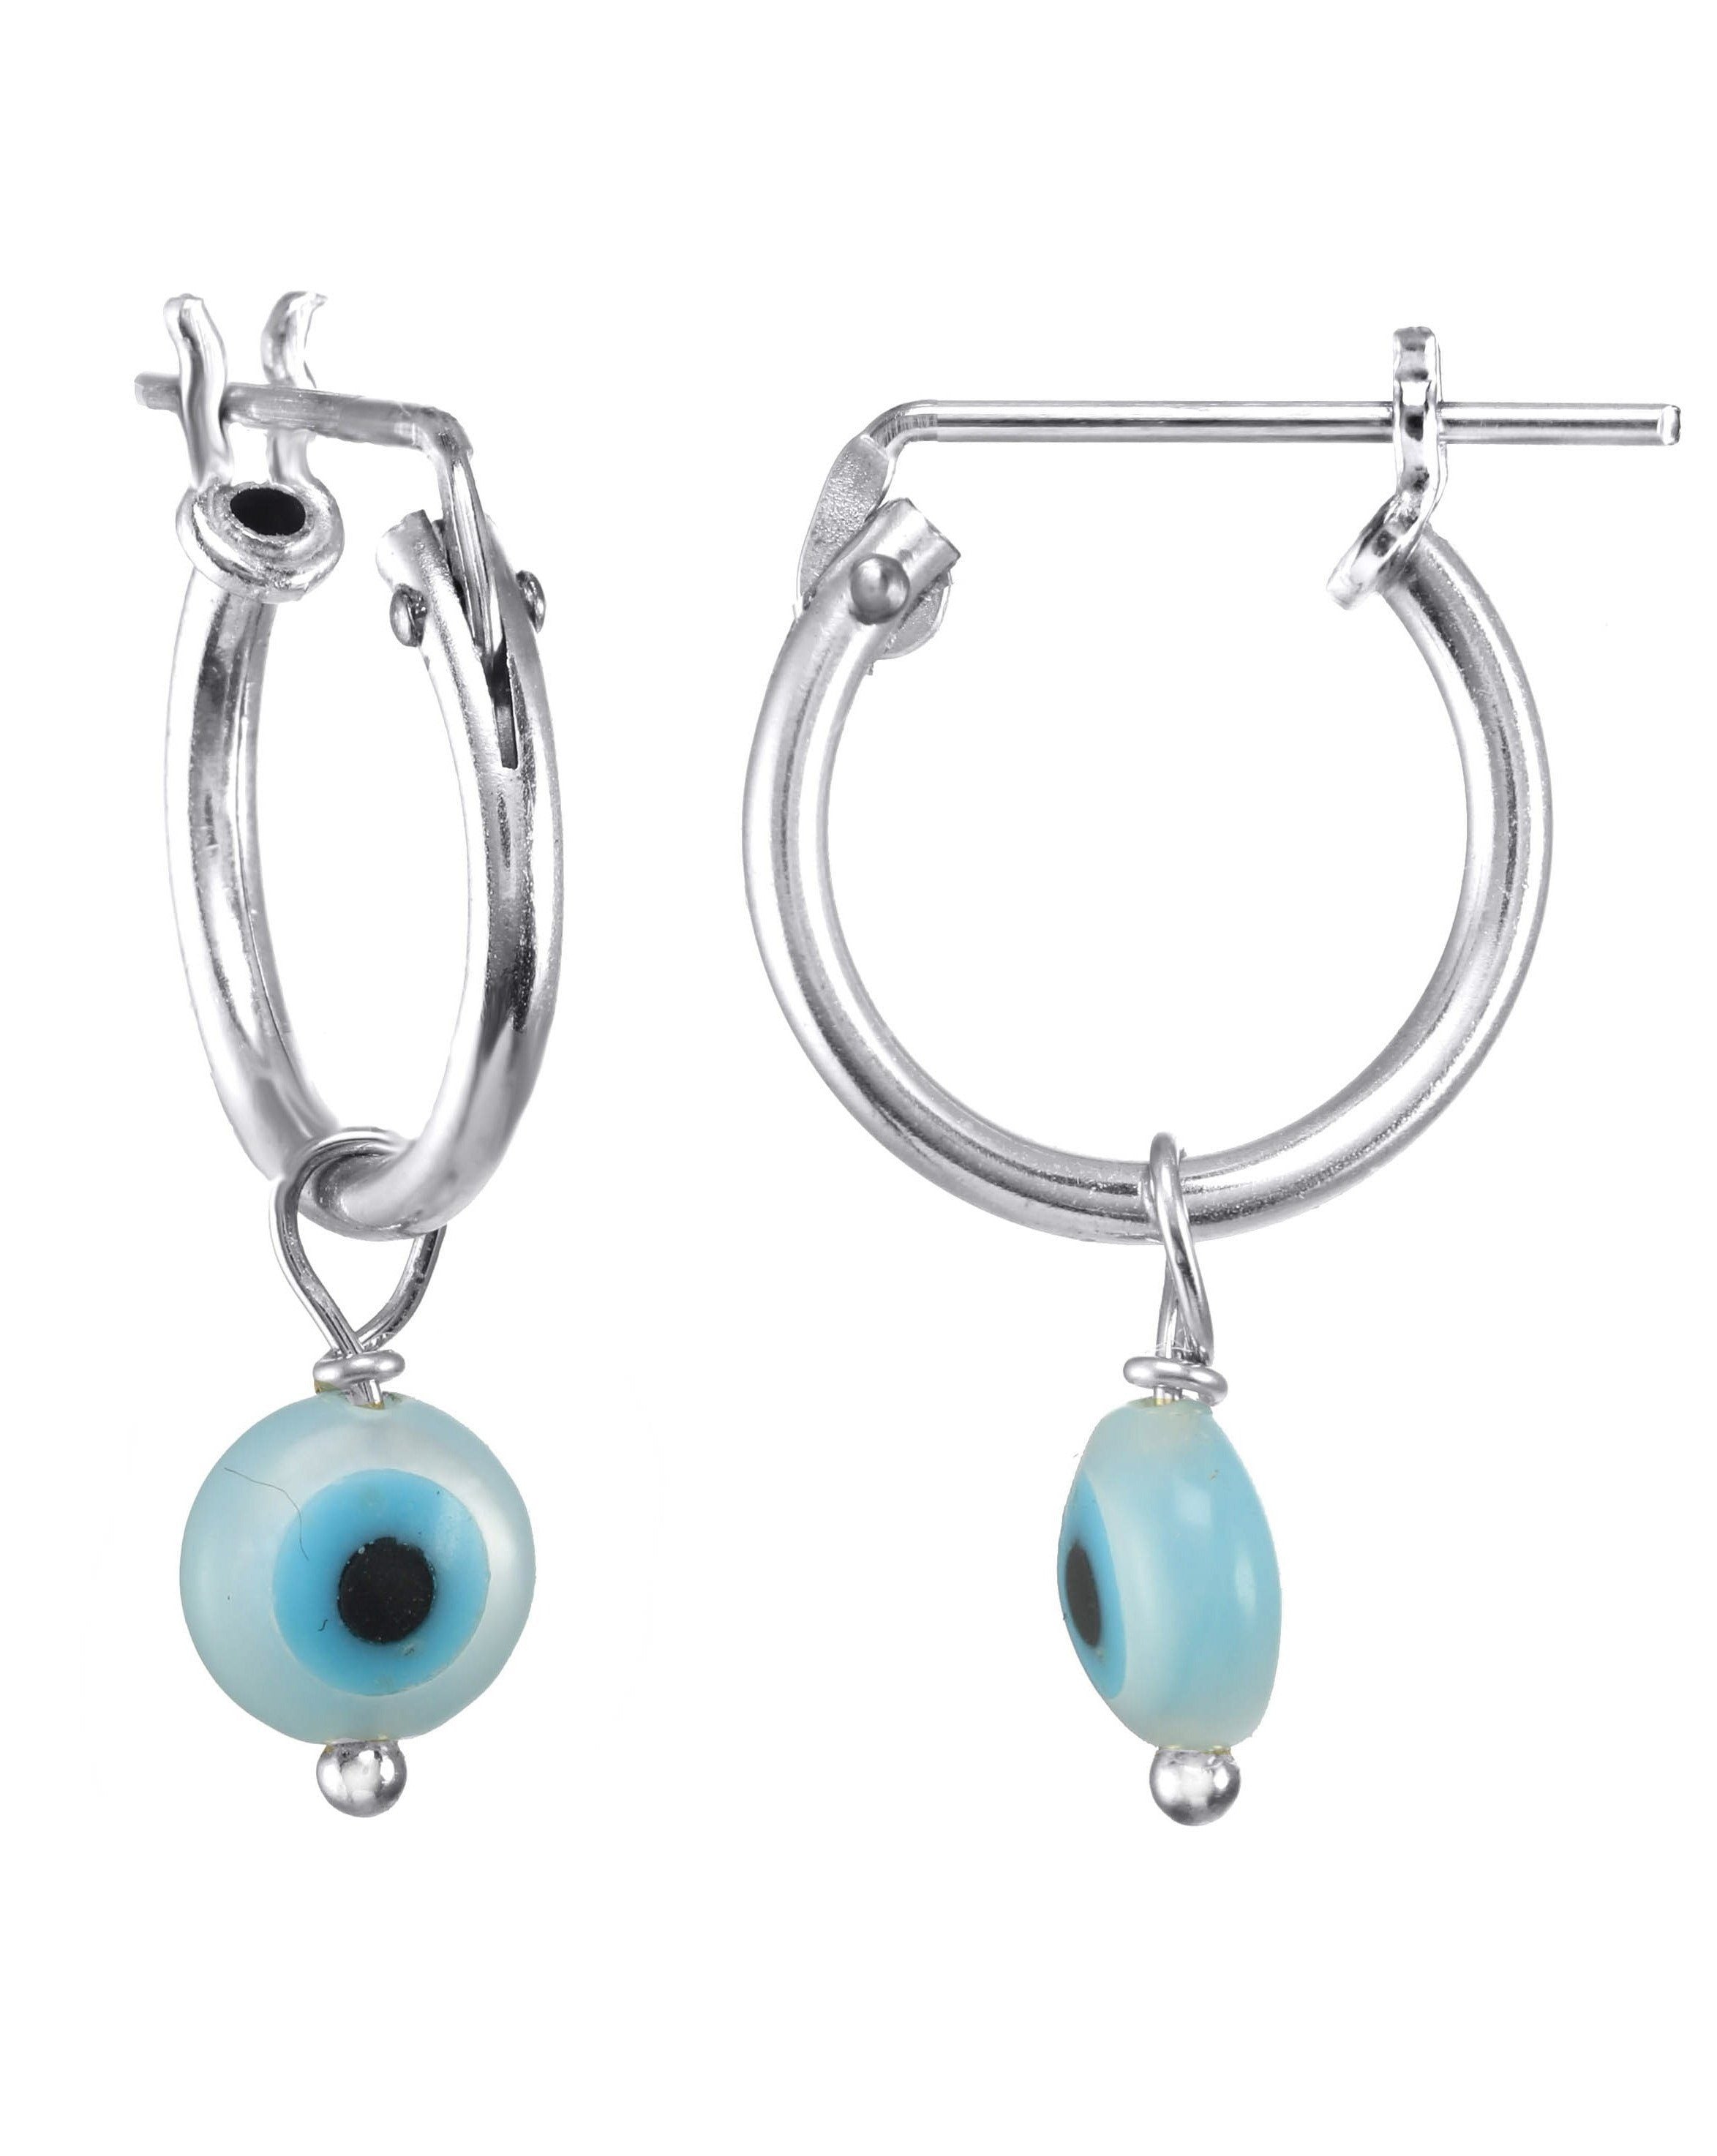 Ellie Hoops by Kozakh. 12mm hoop earrings, crafted in Sterling Silver, featuring a Mother of Pearl Evil Eye.